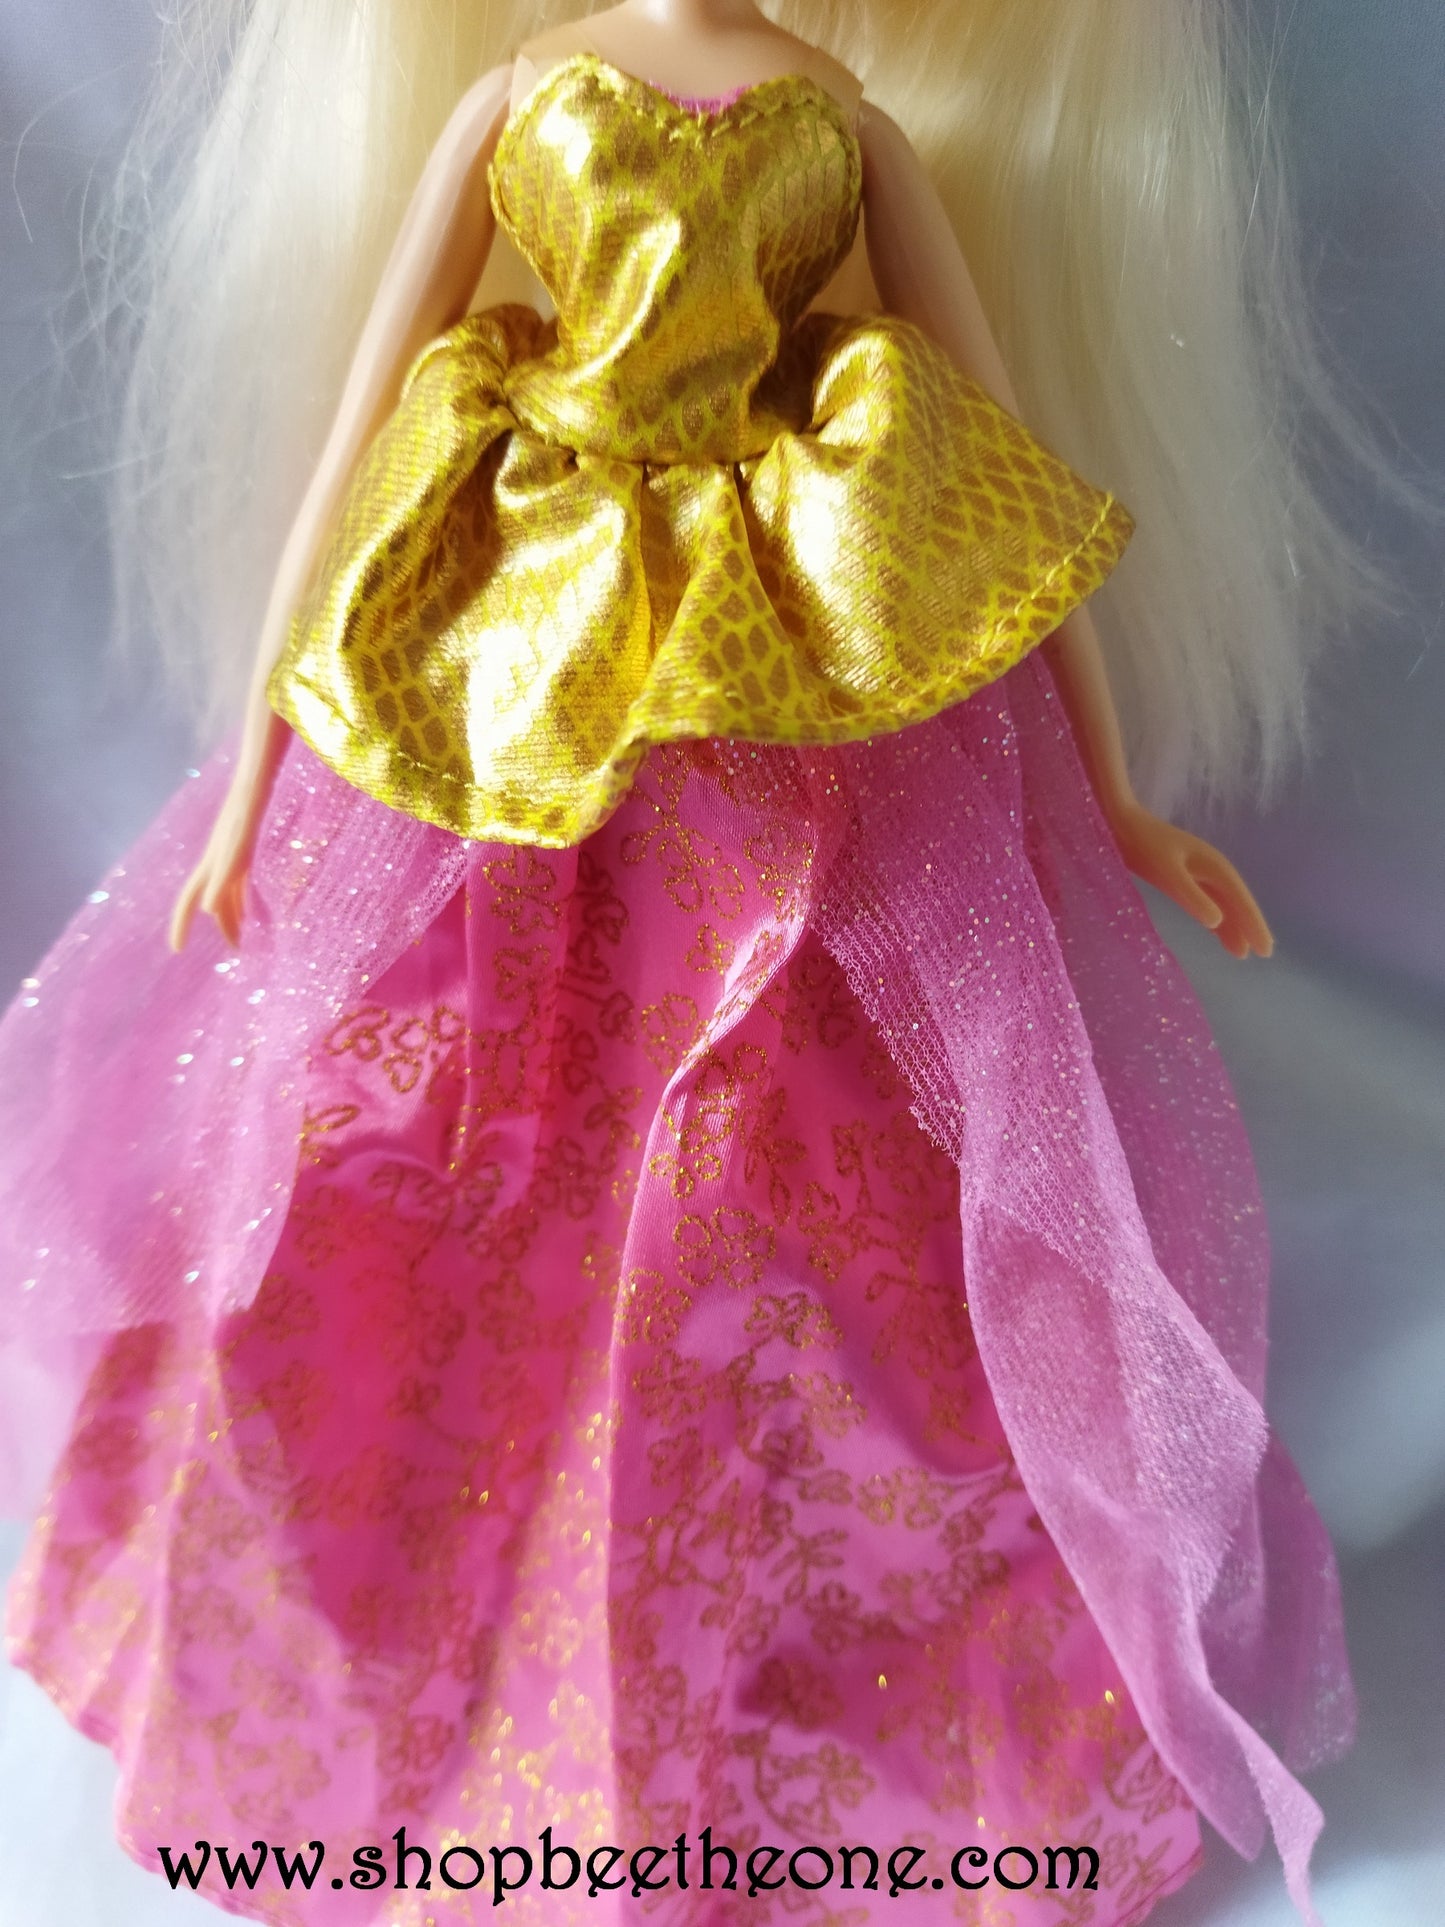 Stella Magical Princess - Witty Toys 2014 - Poupée - Vêtement